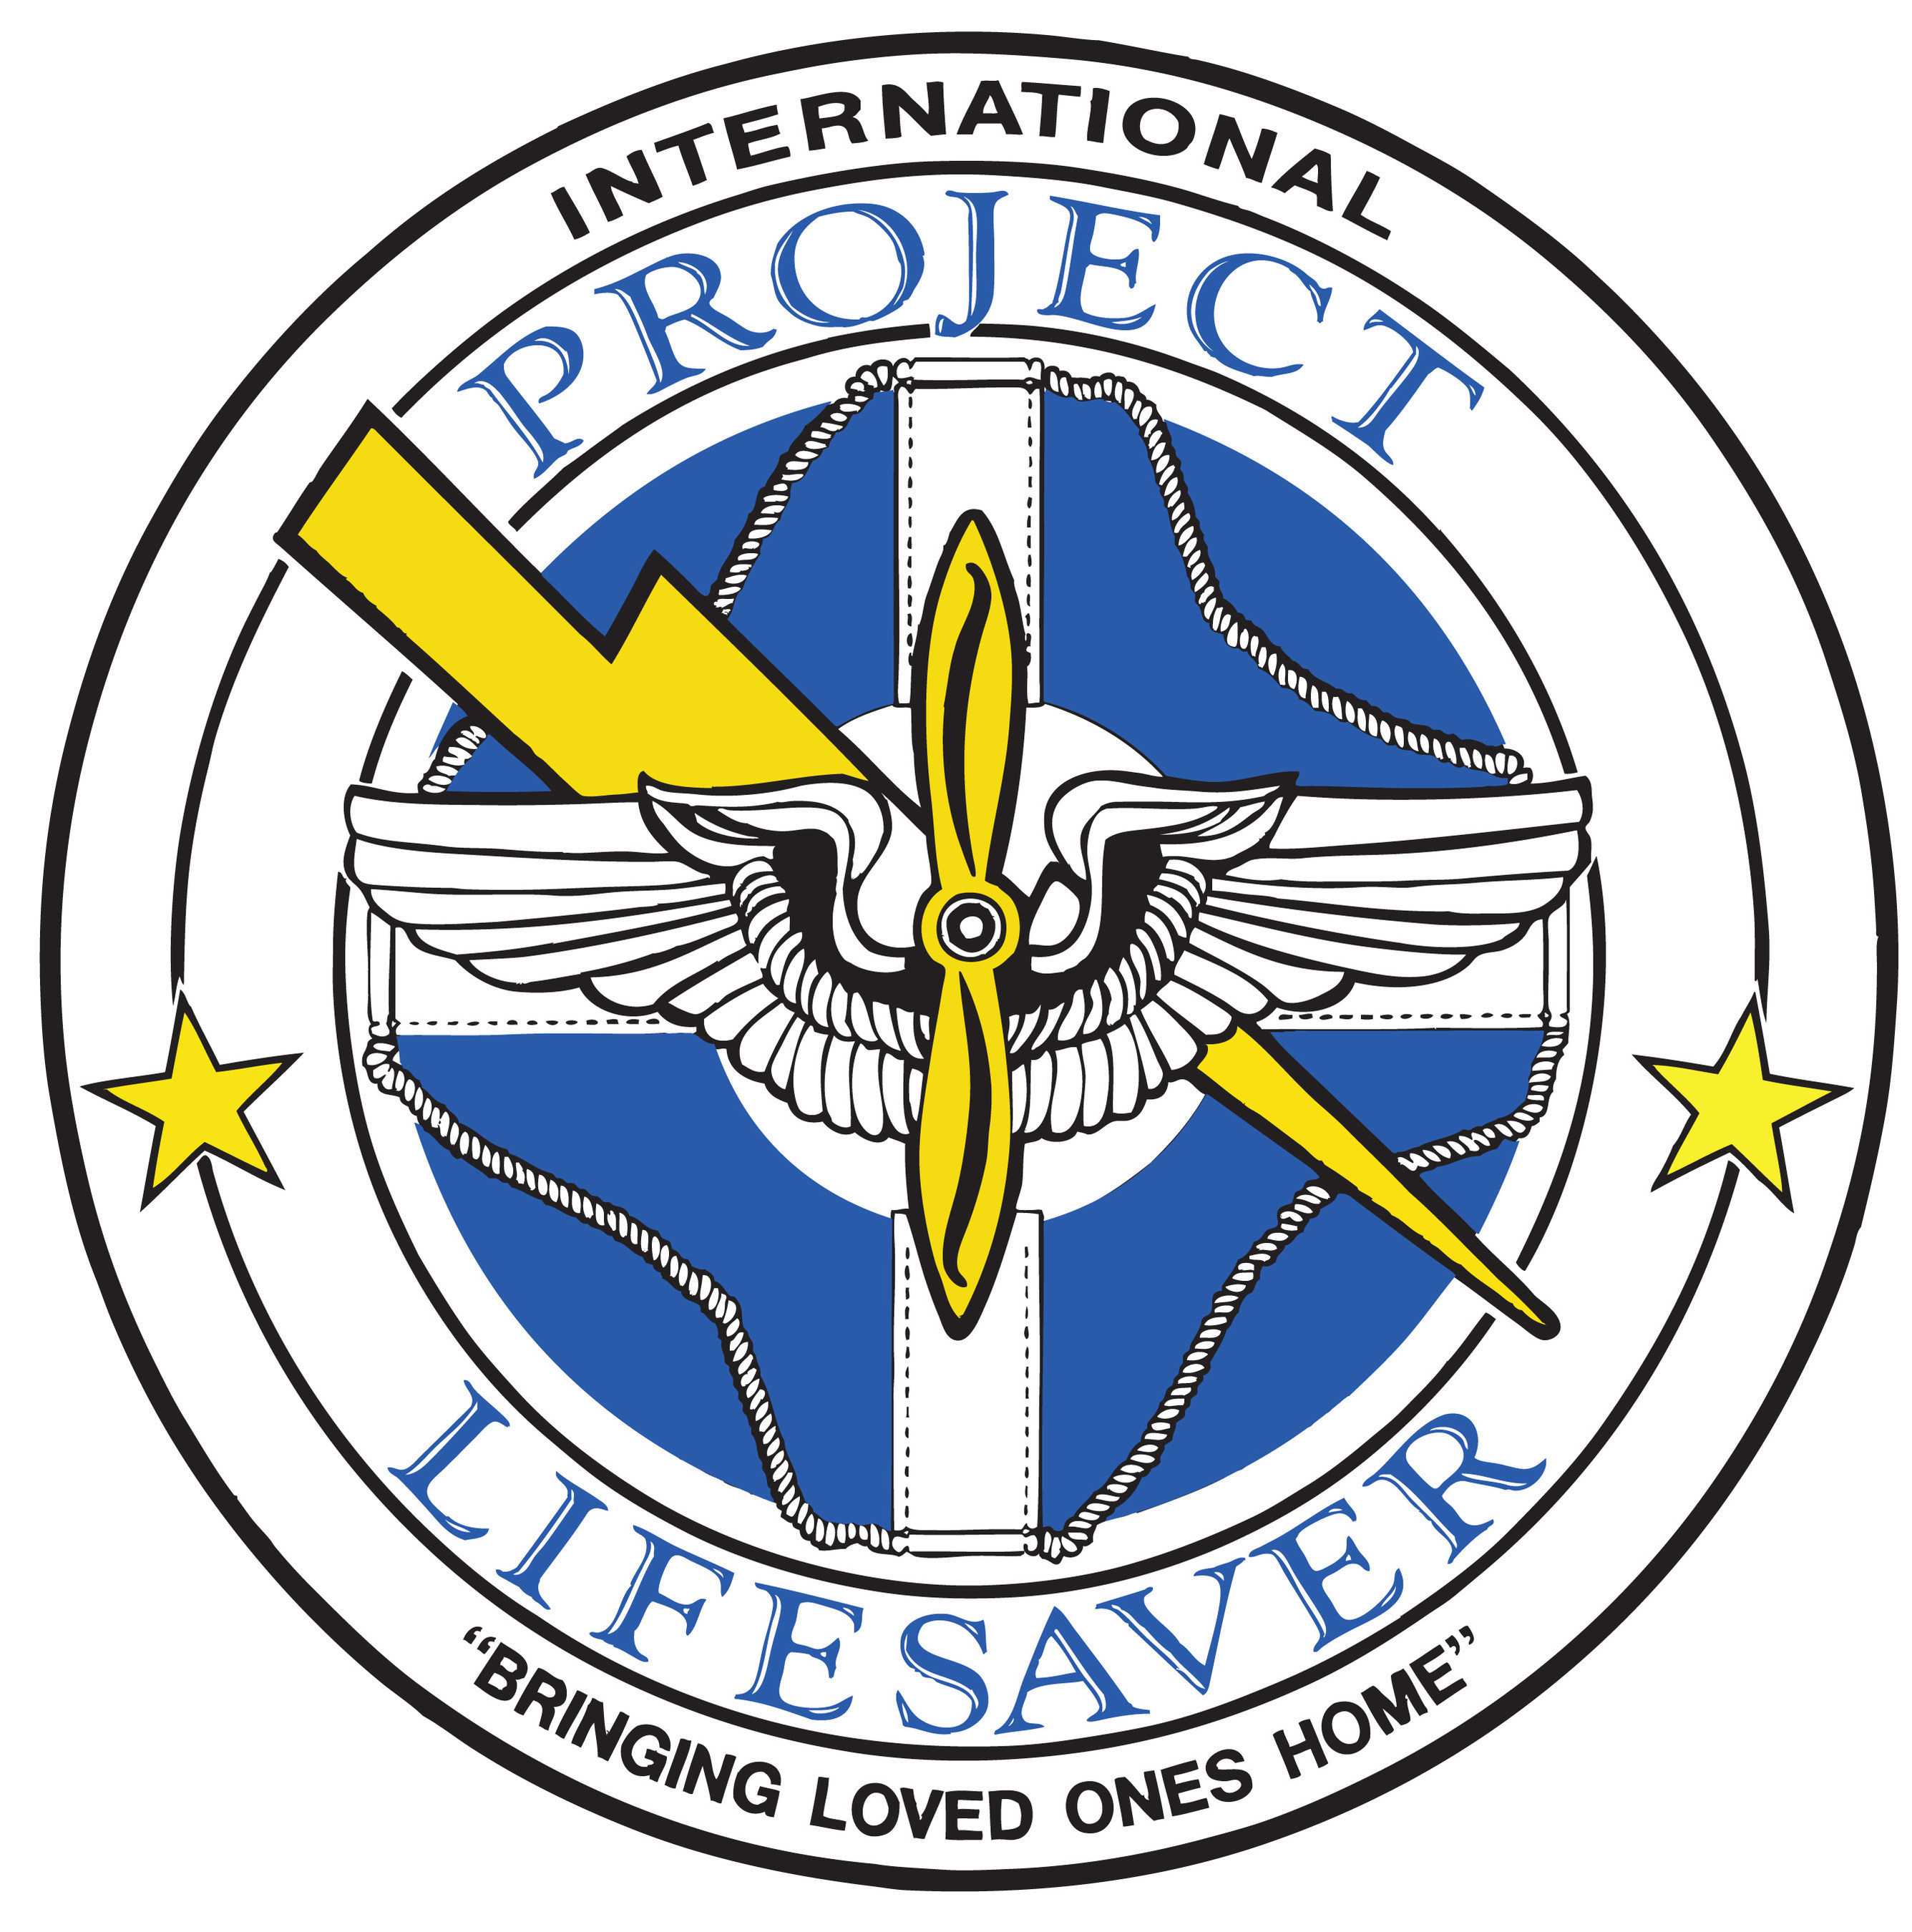 Project Lifesaver International logo